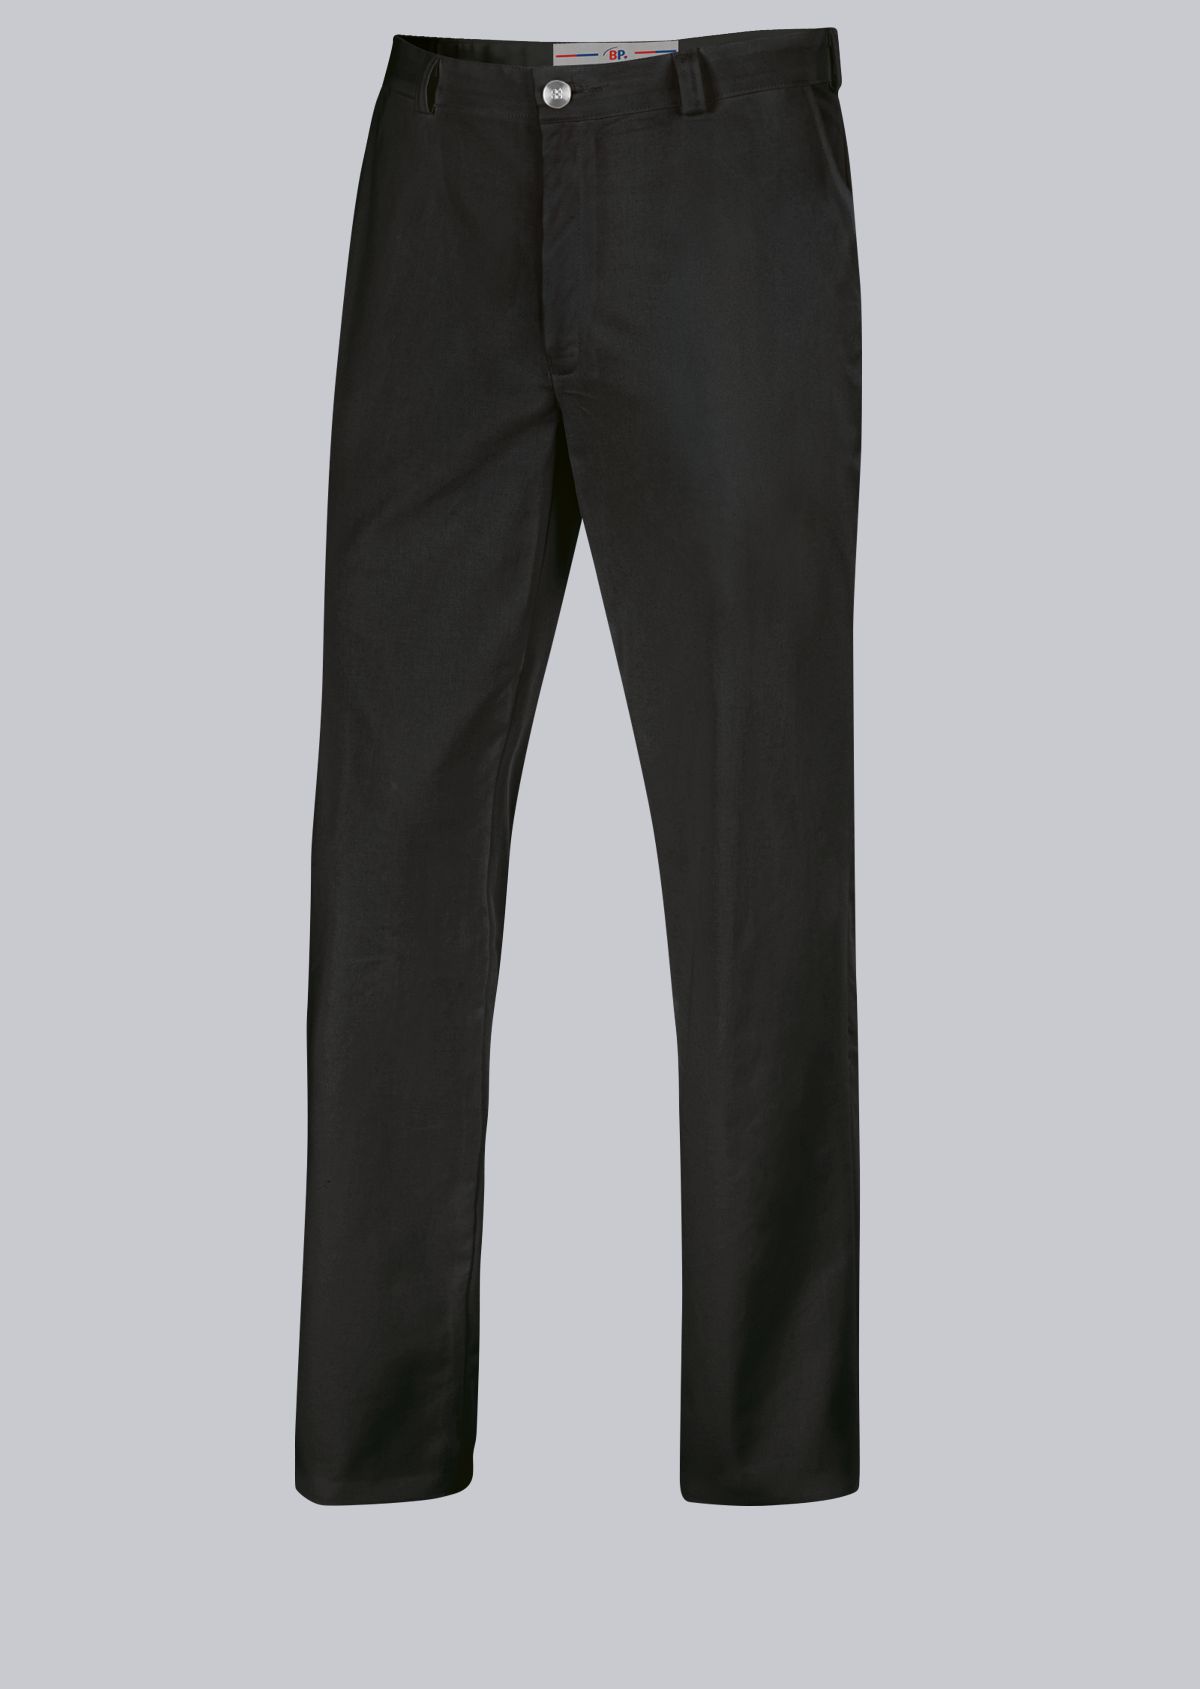 BP® Stretch men's trousers